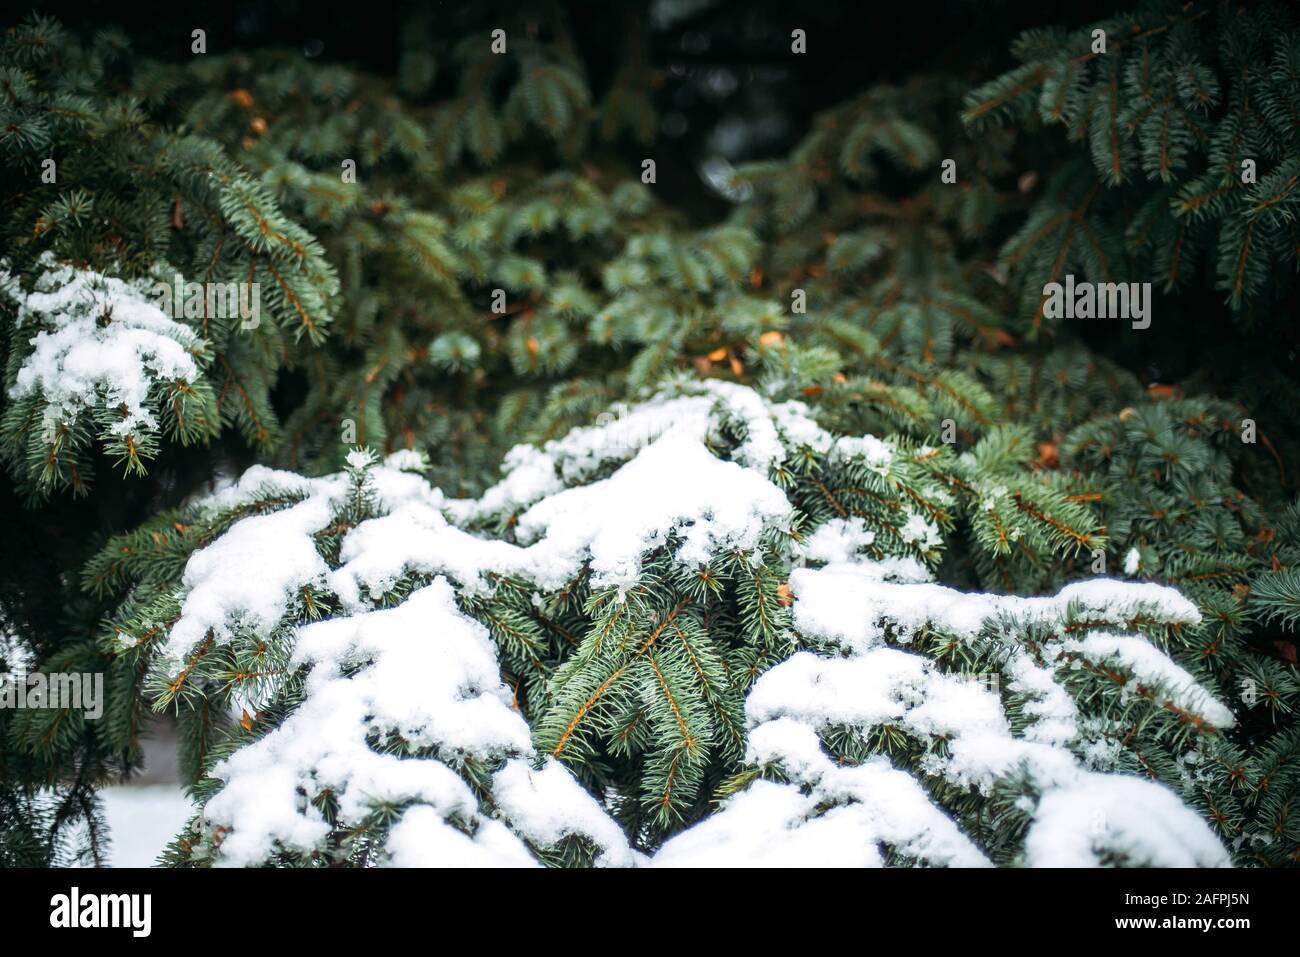 Snow on branch of pine tree Stock Photo